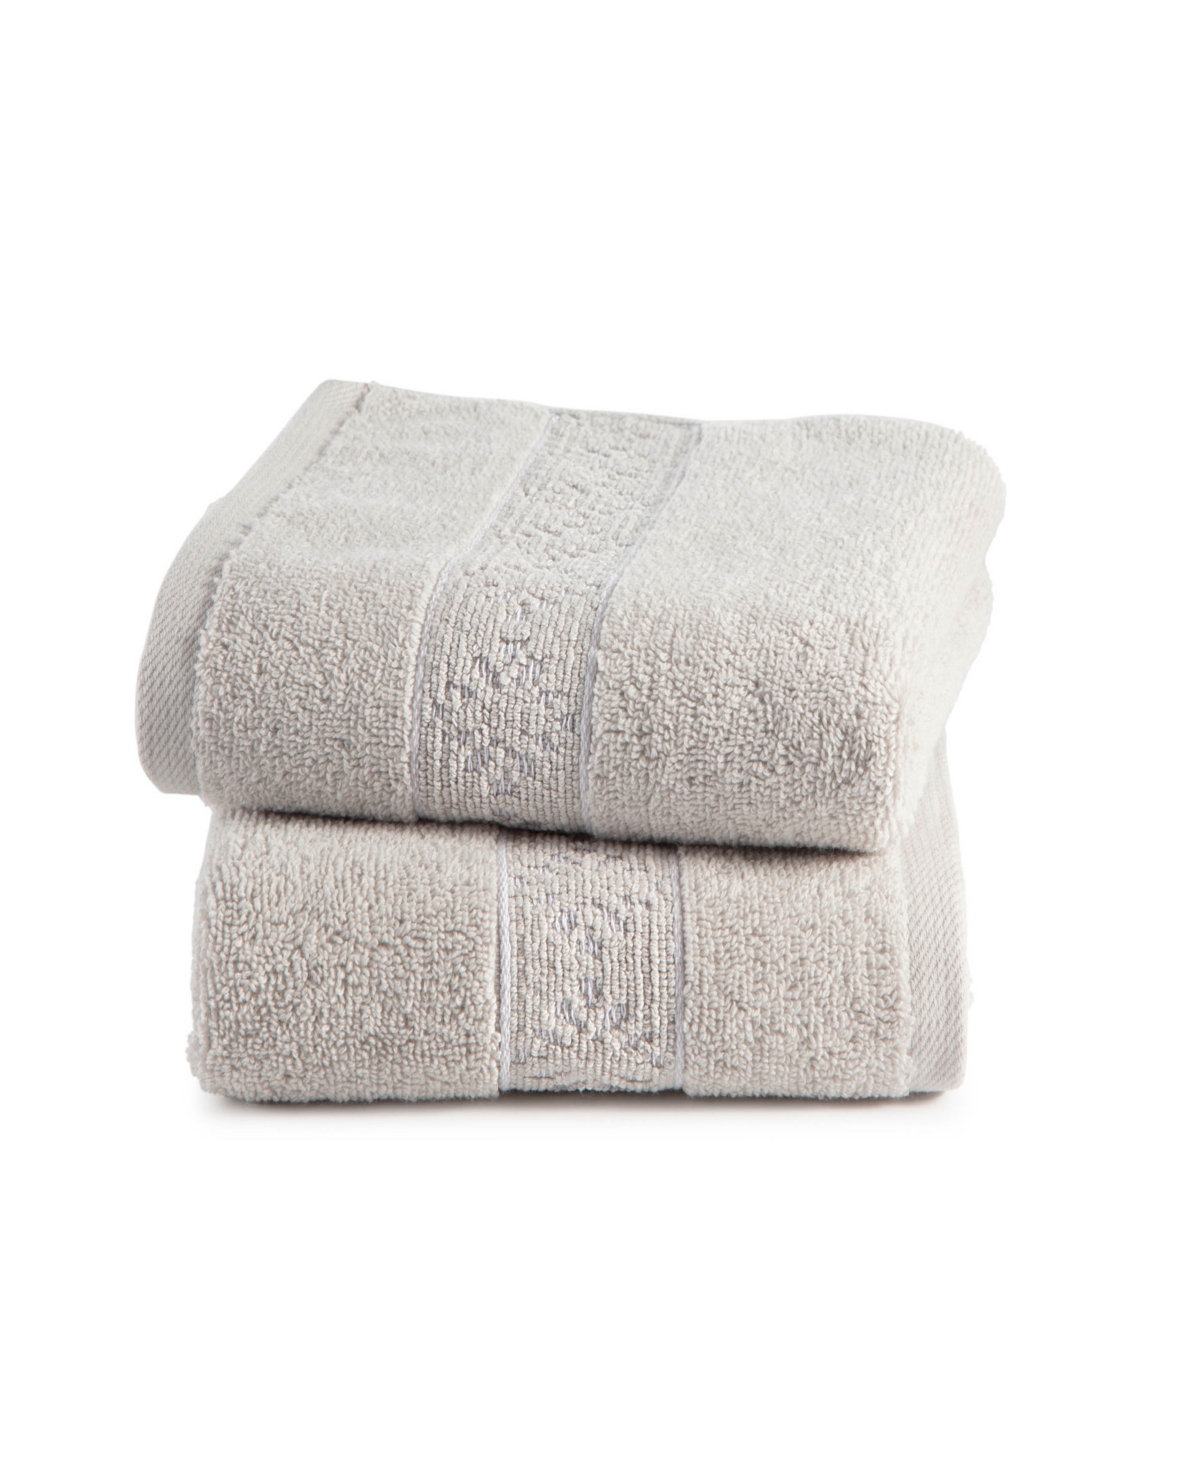 Clean Design Home X Martex Allergen-resistant Savoy 2 Pack Hand Towel Set In Gray